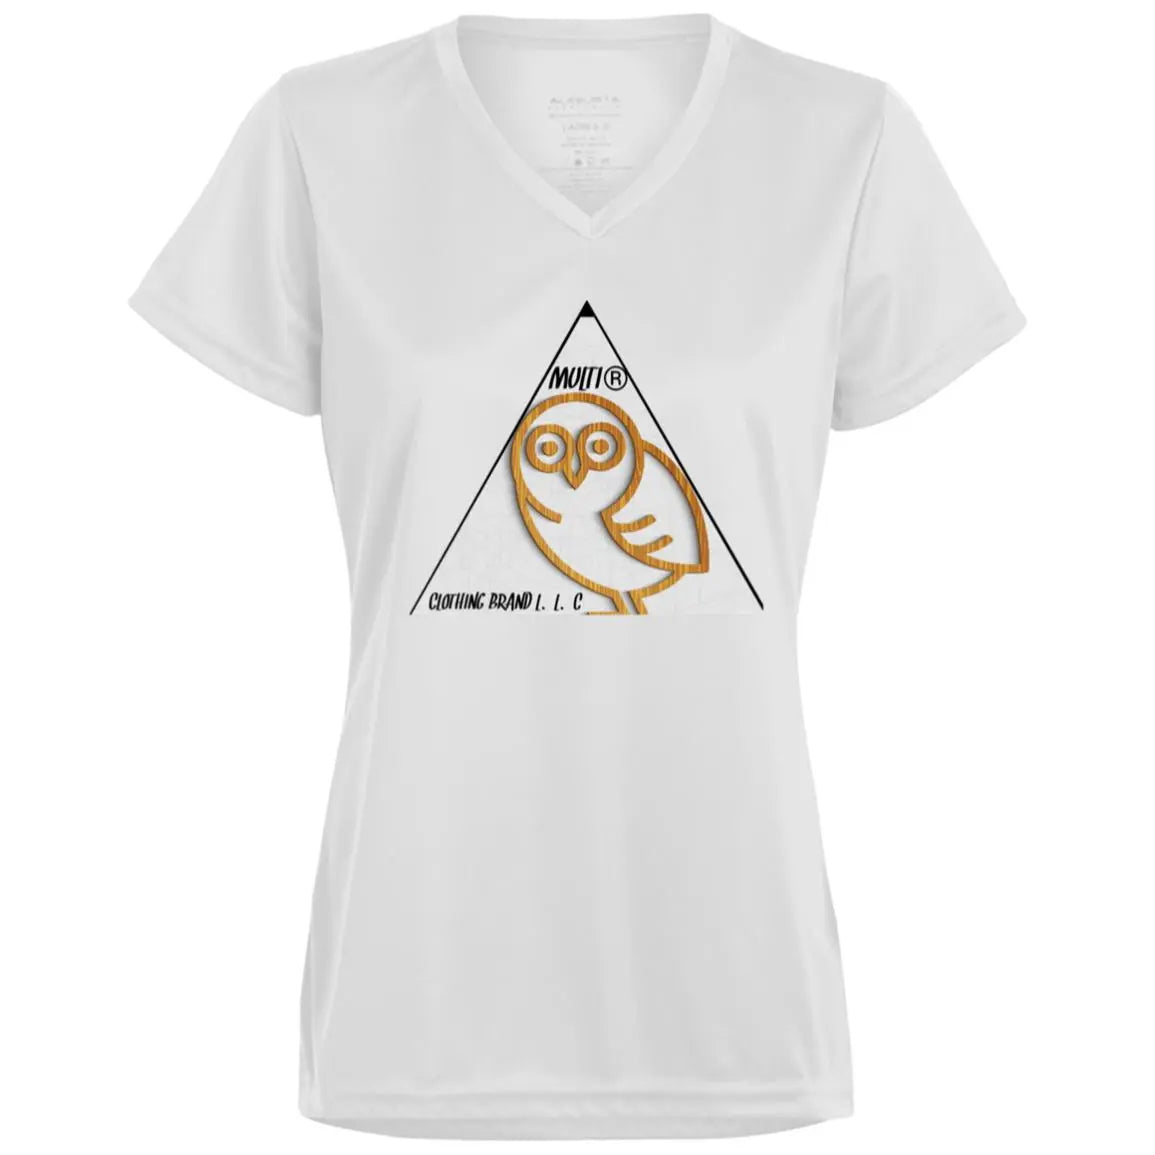 Multi Clothing Brand L.L.C - Owl - 1790 Ladies’ Moisture-Wicking V-Neck Tee CustomCat